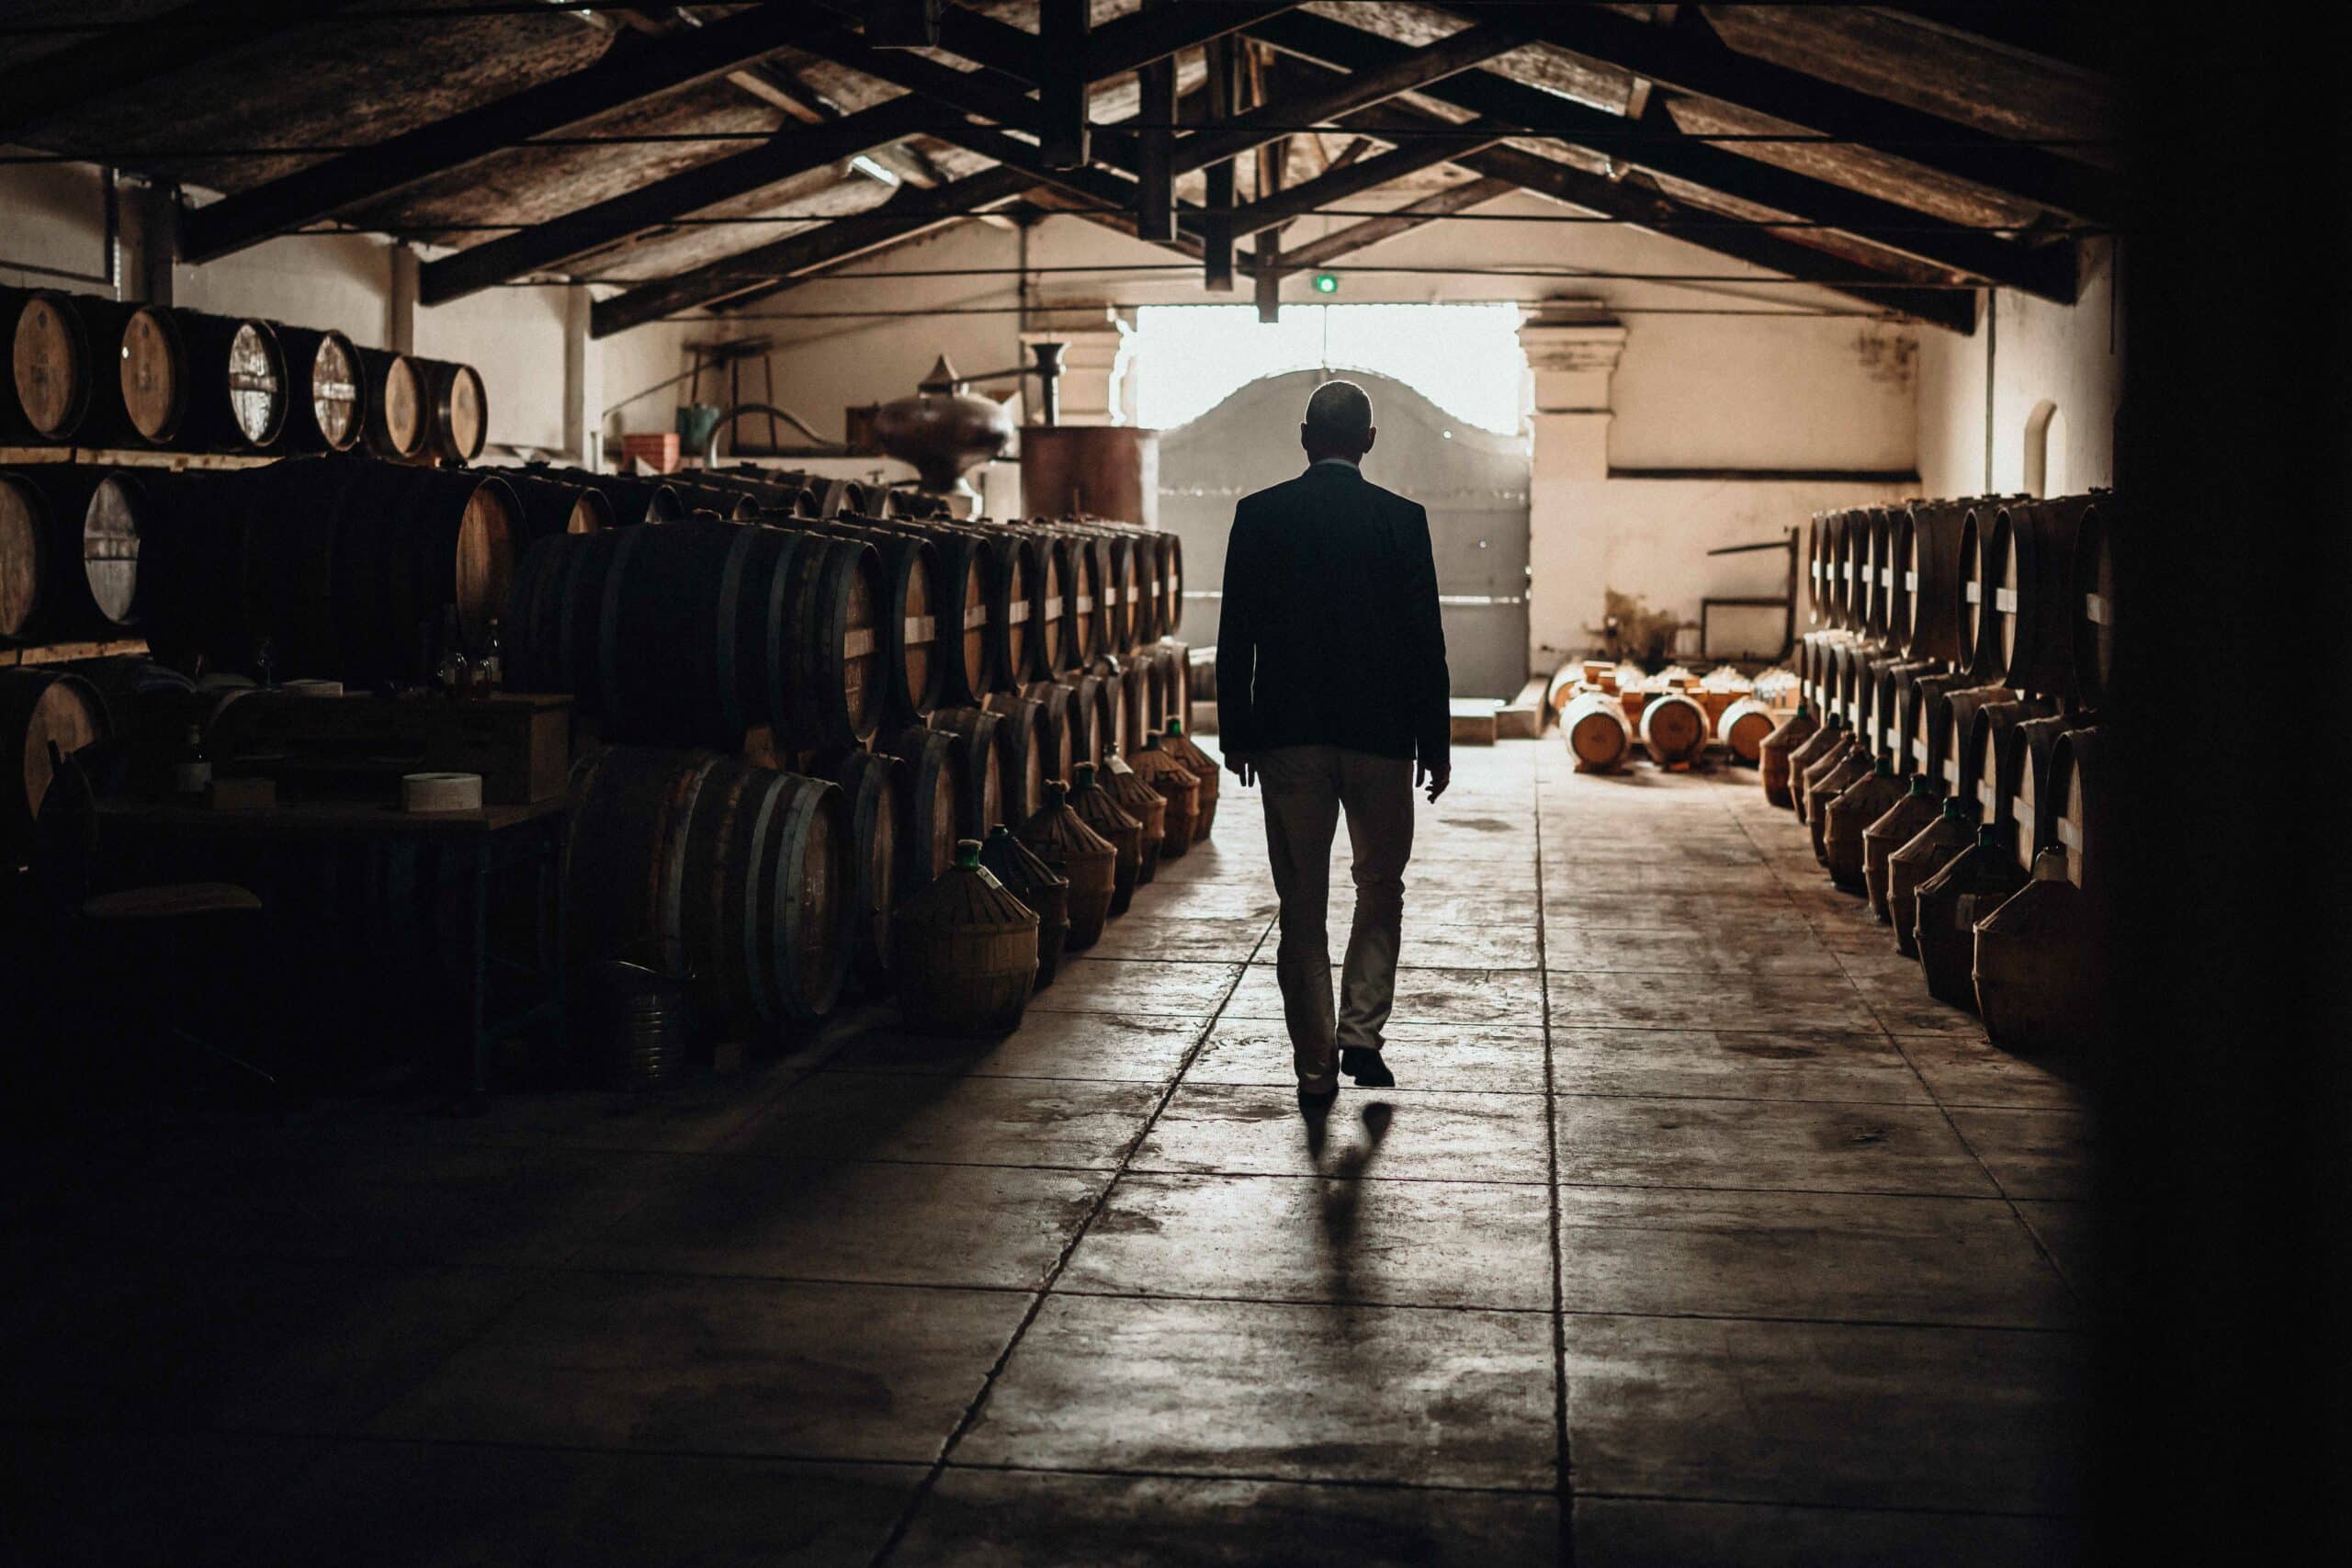 Jean-Phillipe Bergier, cellar master walking in the cellar full of cognac and whisky barrels